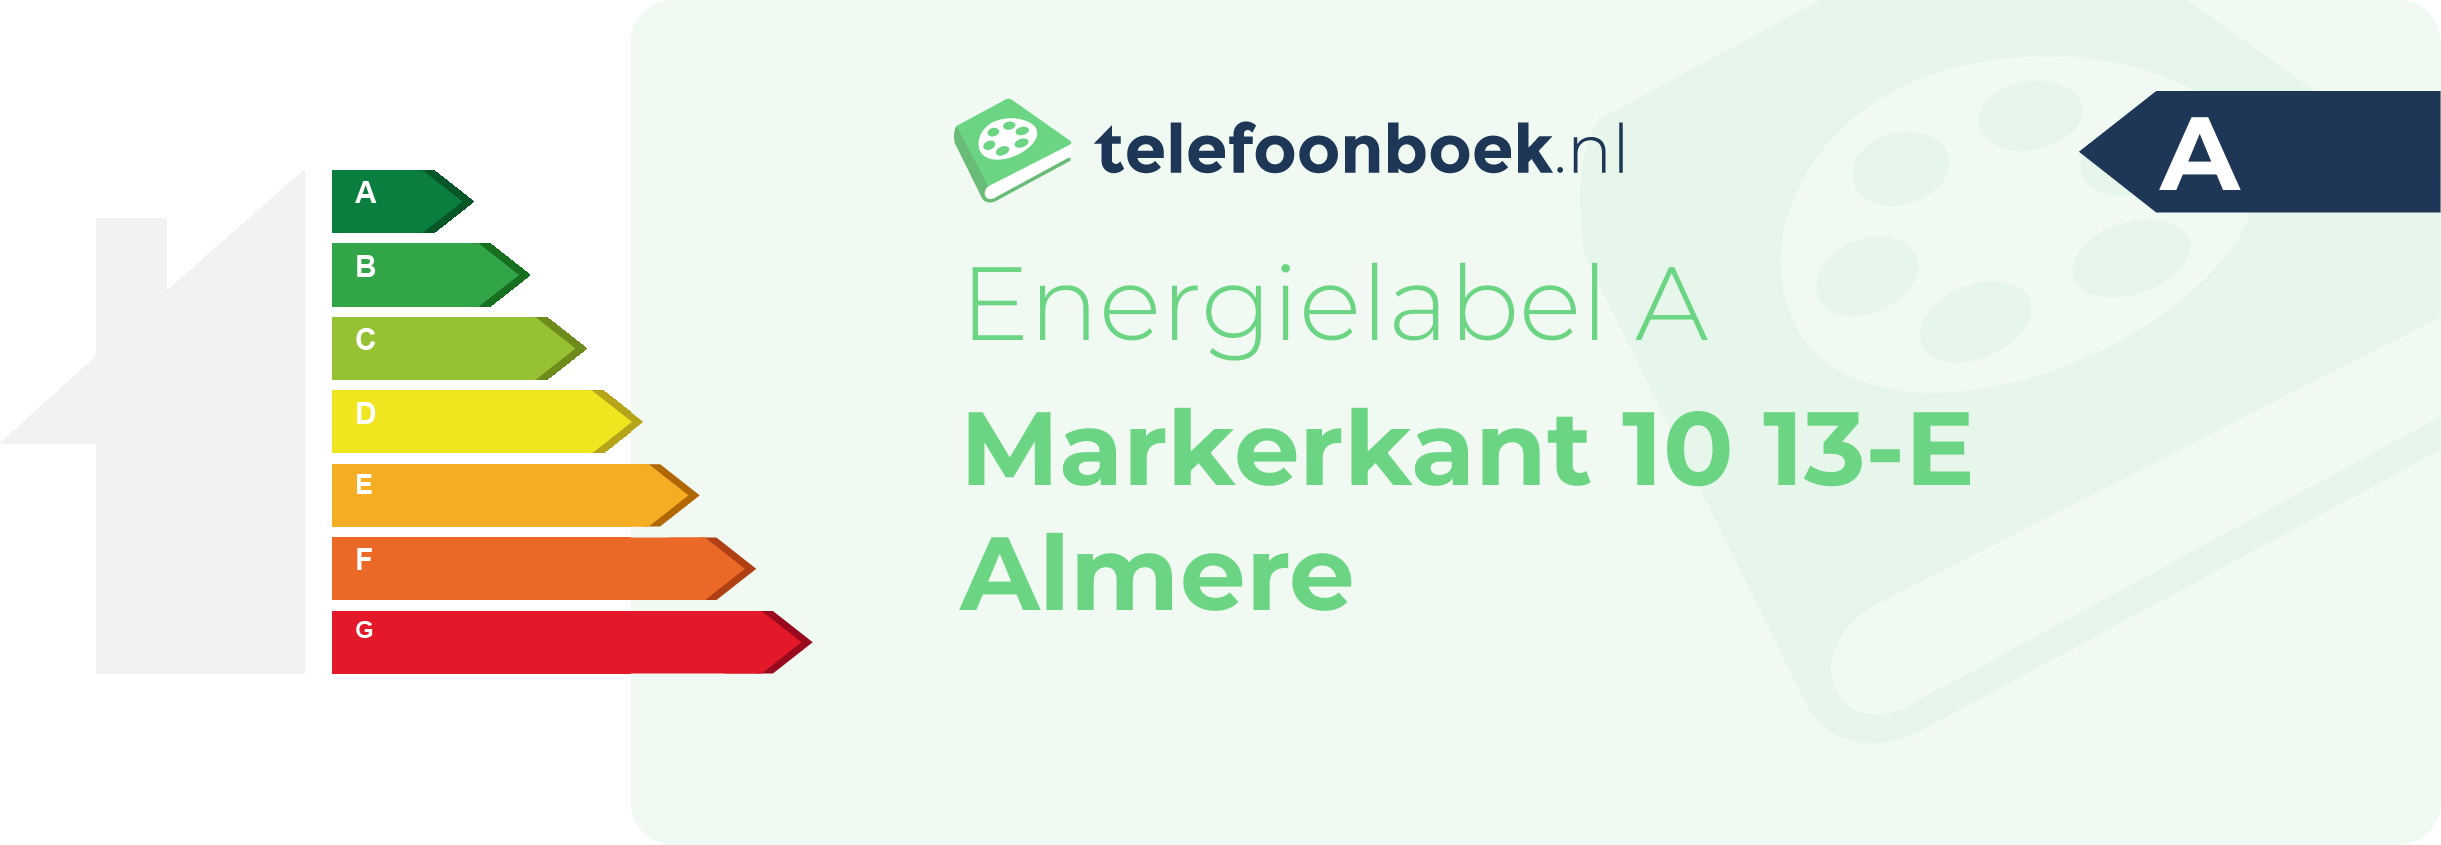 Energielabel Markerkant 10 13-E Almere